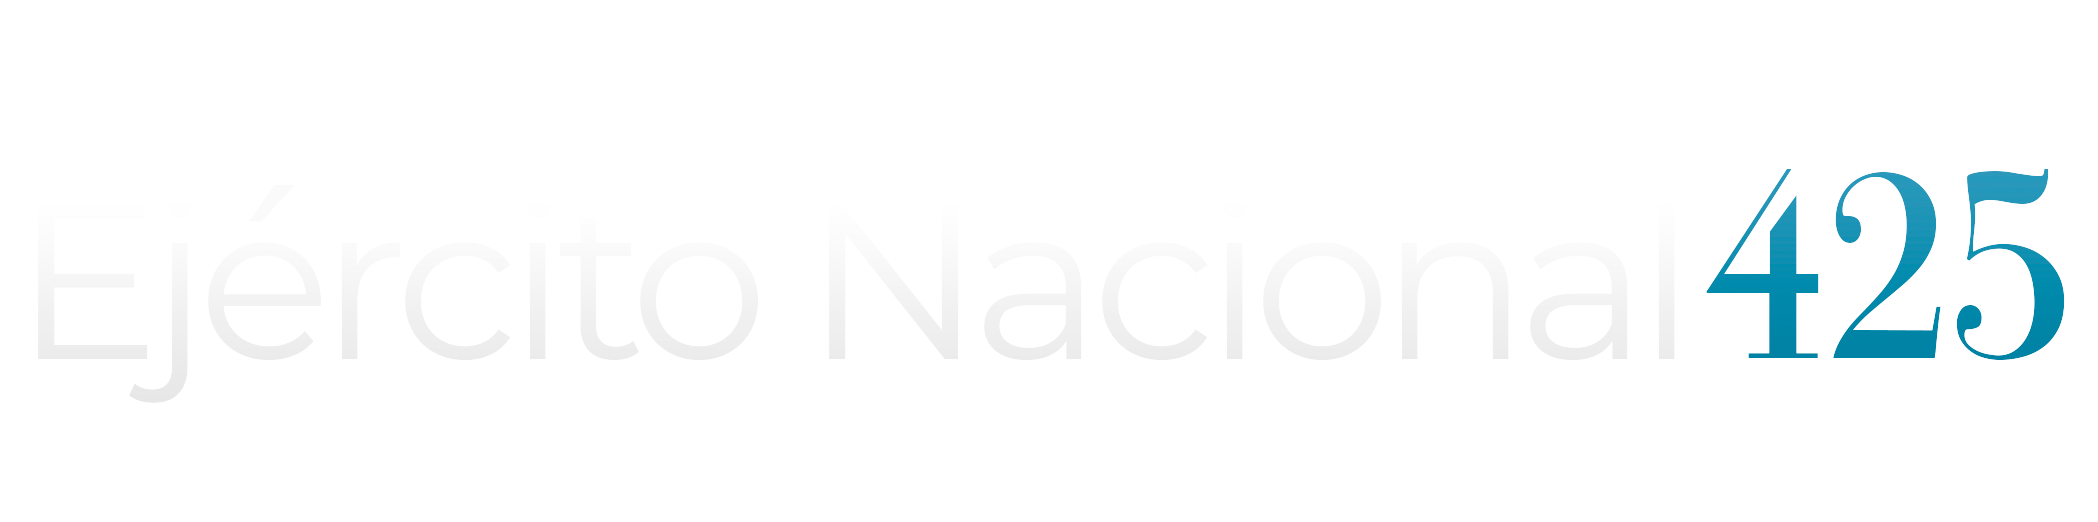 logo enacional